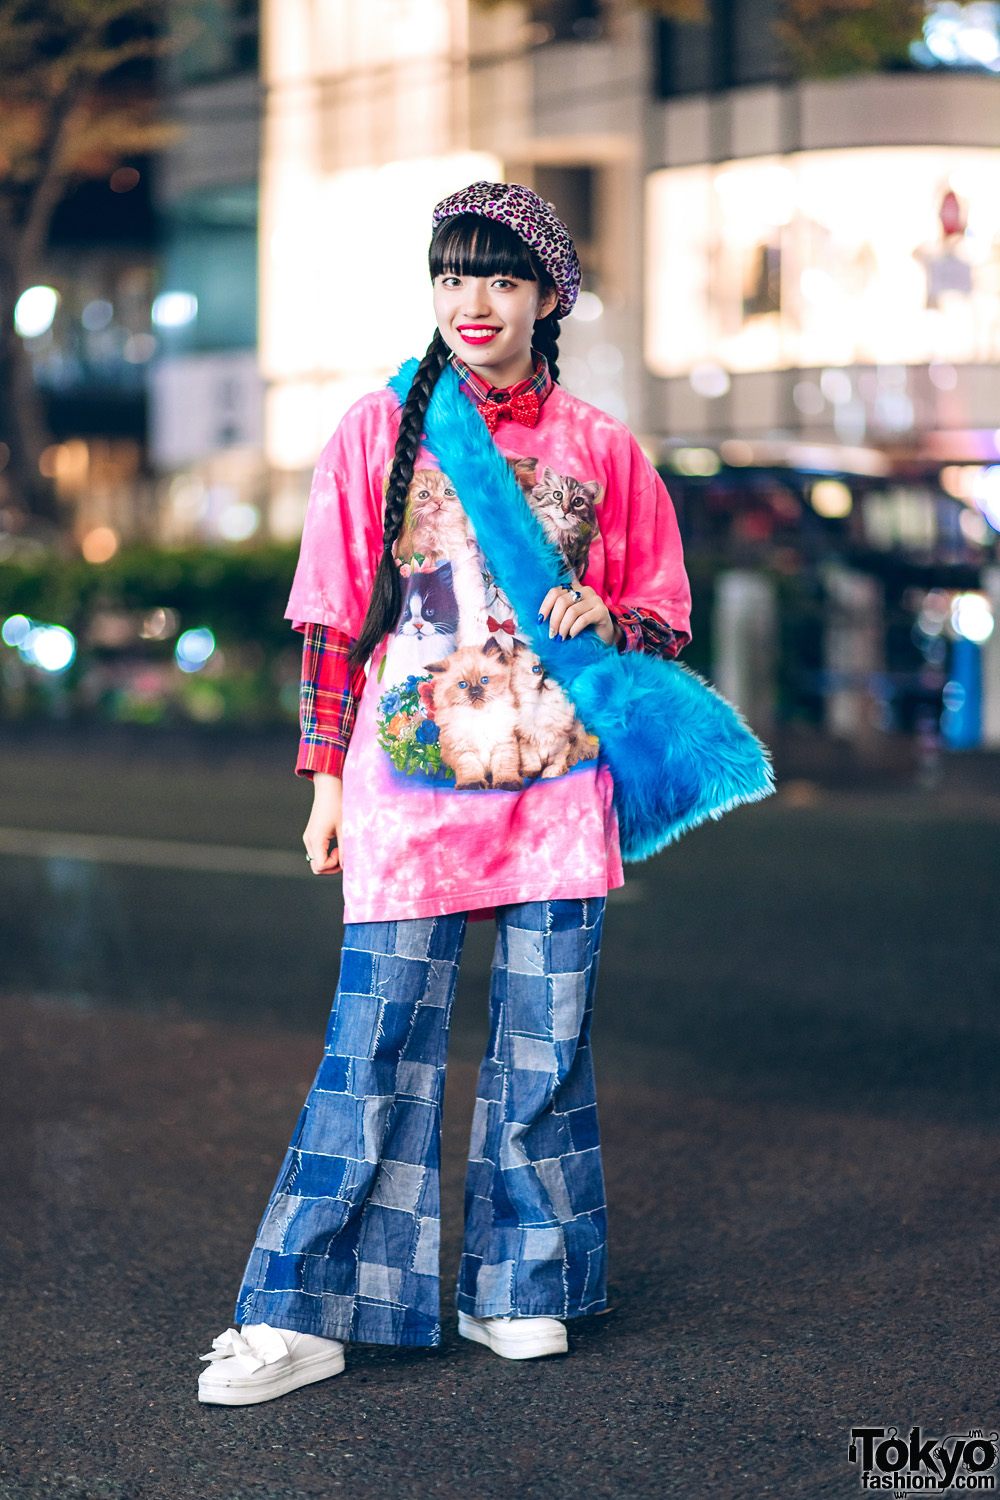 Retro Street Style in Harajuku w/ New York Joe Cat Shirt, Patchwork Flared Jeans, Vivienne Westwood, Palnart Poc & Fuzzy Bag